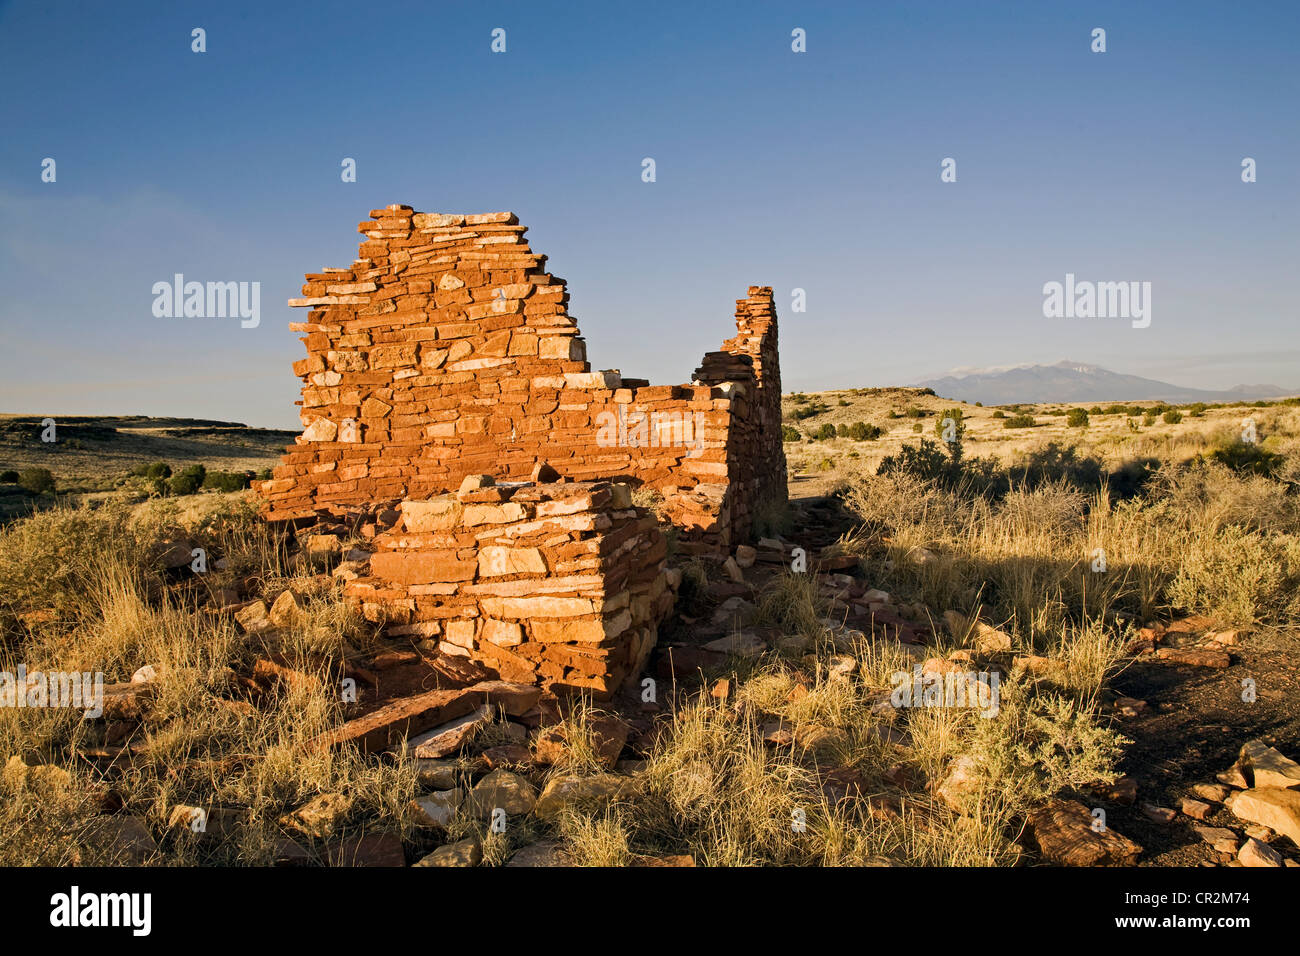 The sandstone walls of Box Canyon pueblo at Lomaki Ruins in Wupatki National Park, Arizona, just below the San Francisco Peaks. Stock Photo